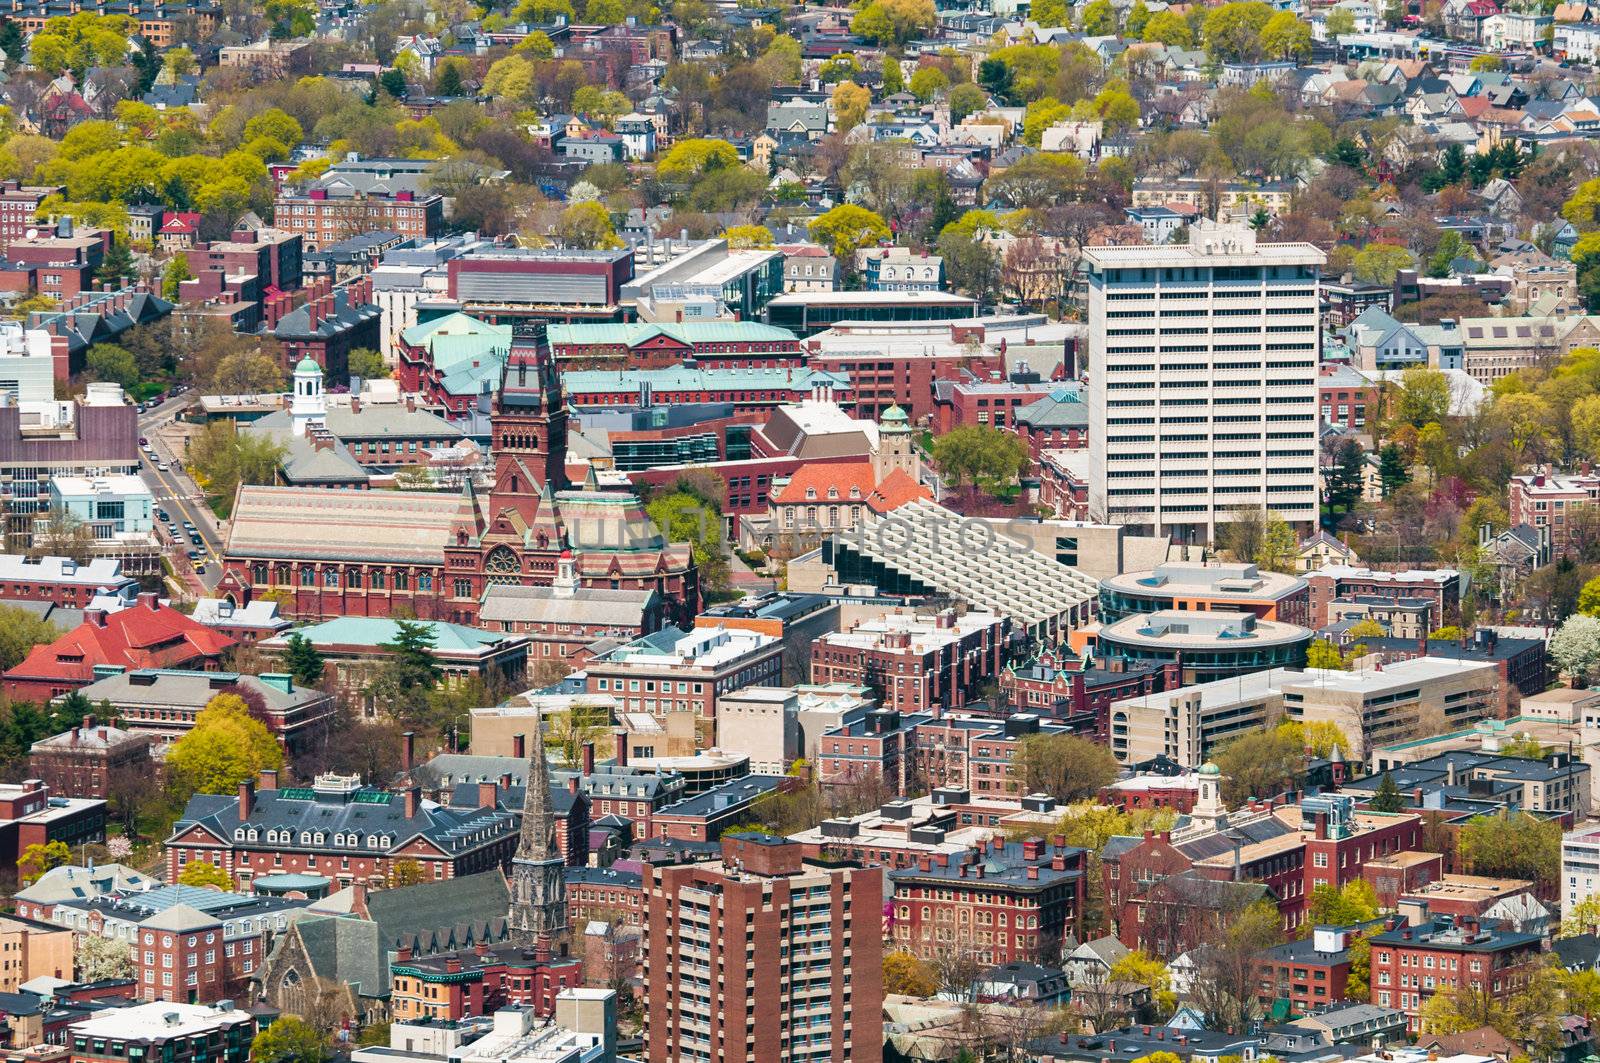 Aerial view of the Harvard University campus